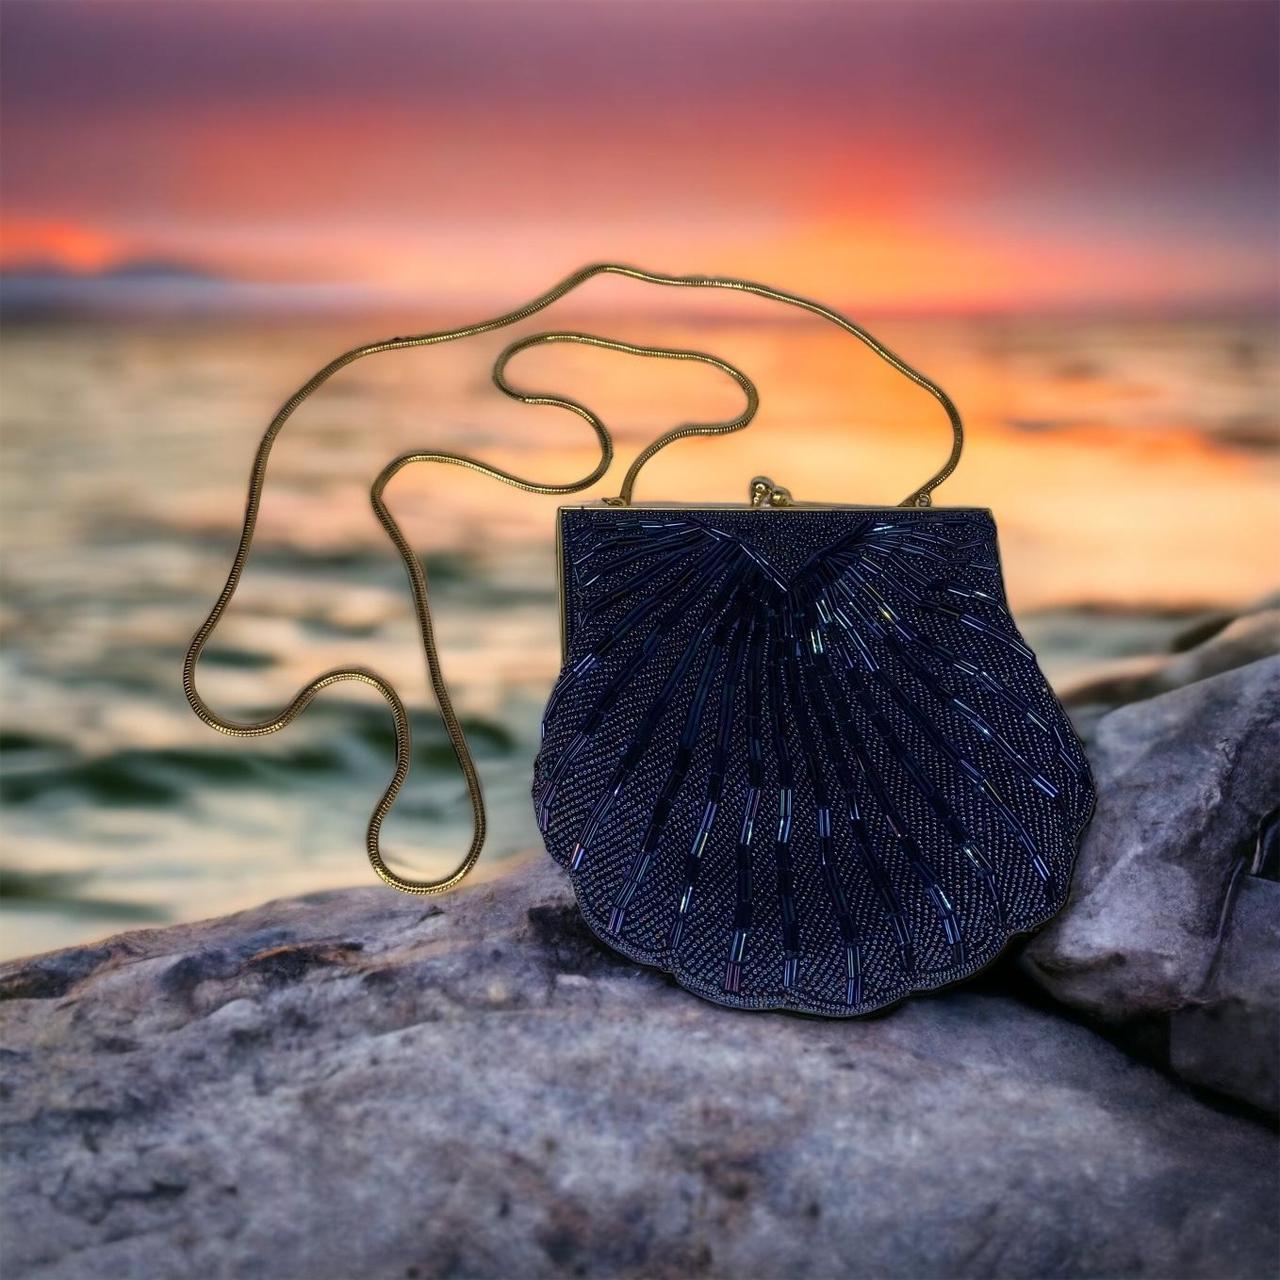 Gorgeous bead work Sea shell clutch purse 🫶🏻free gift - Depop